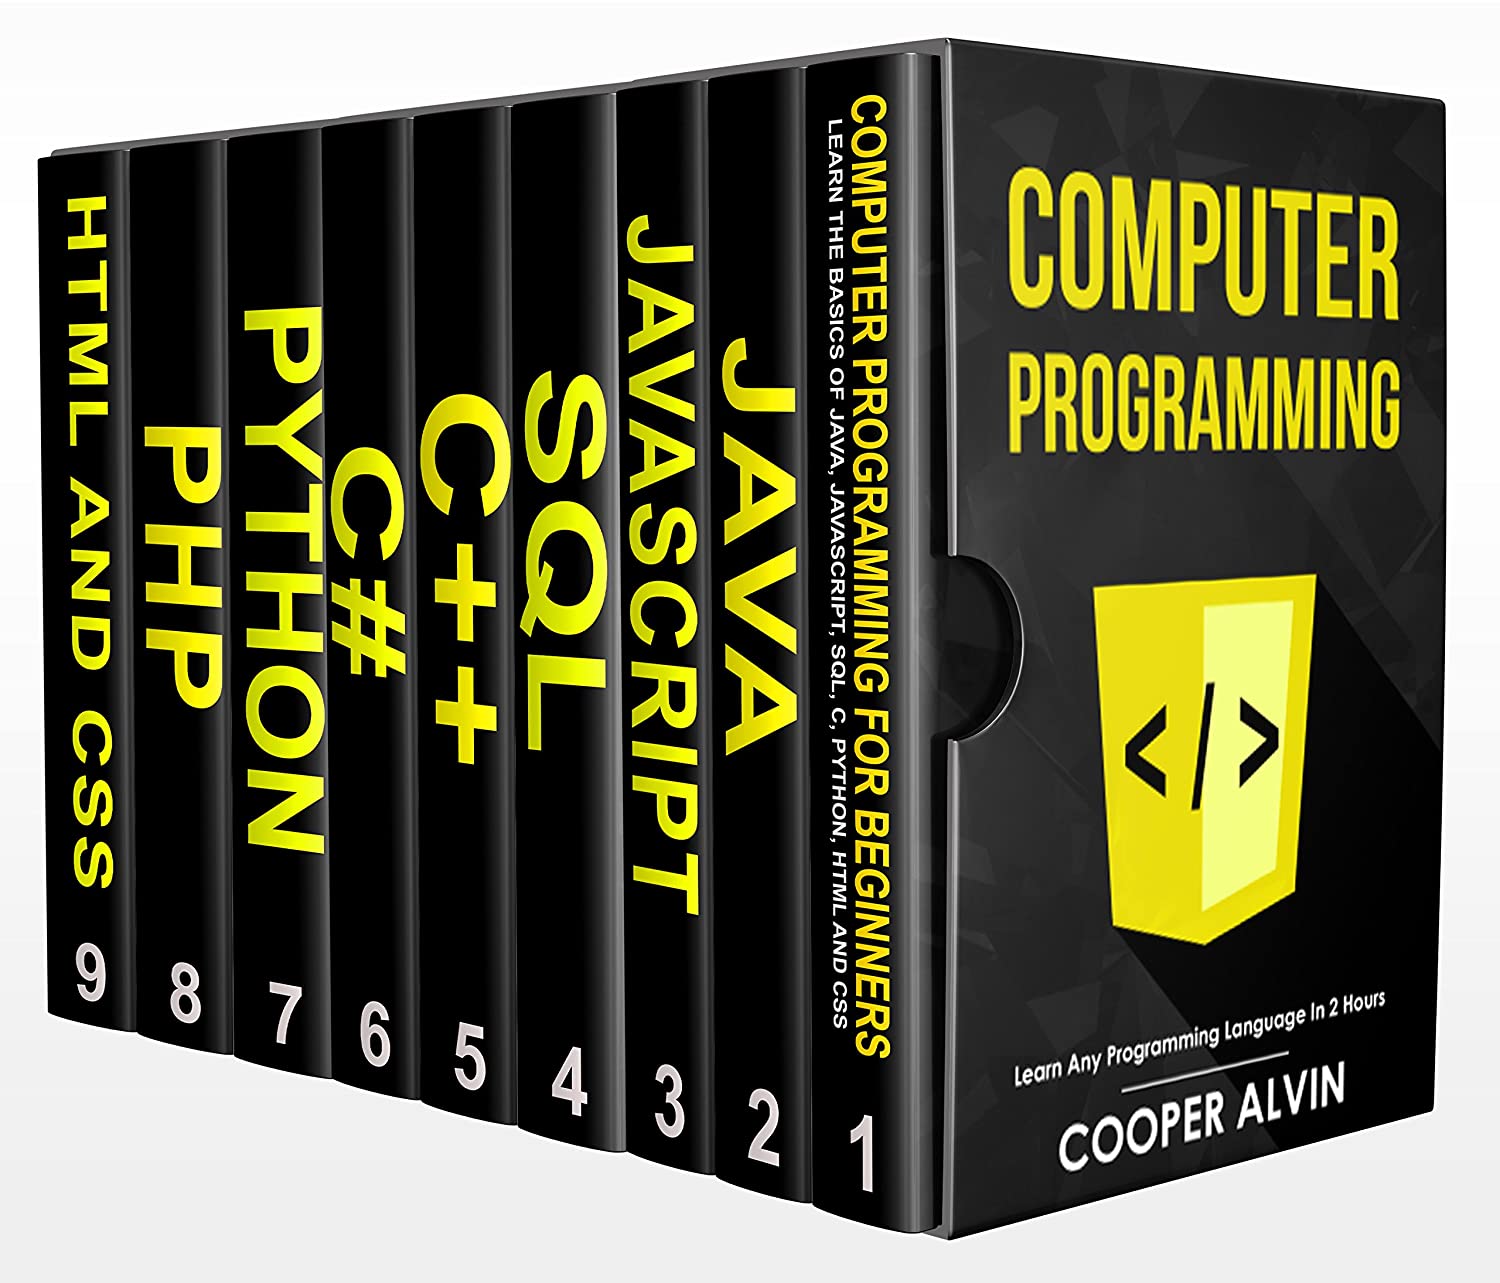 Книги про программирование